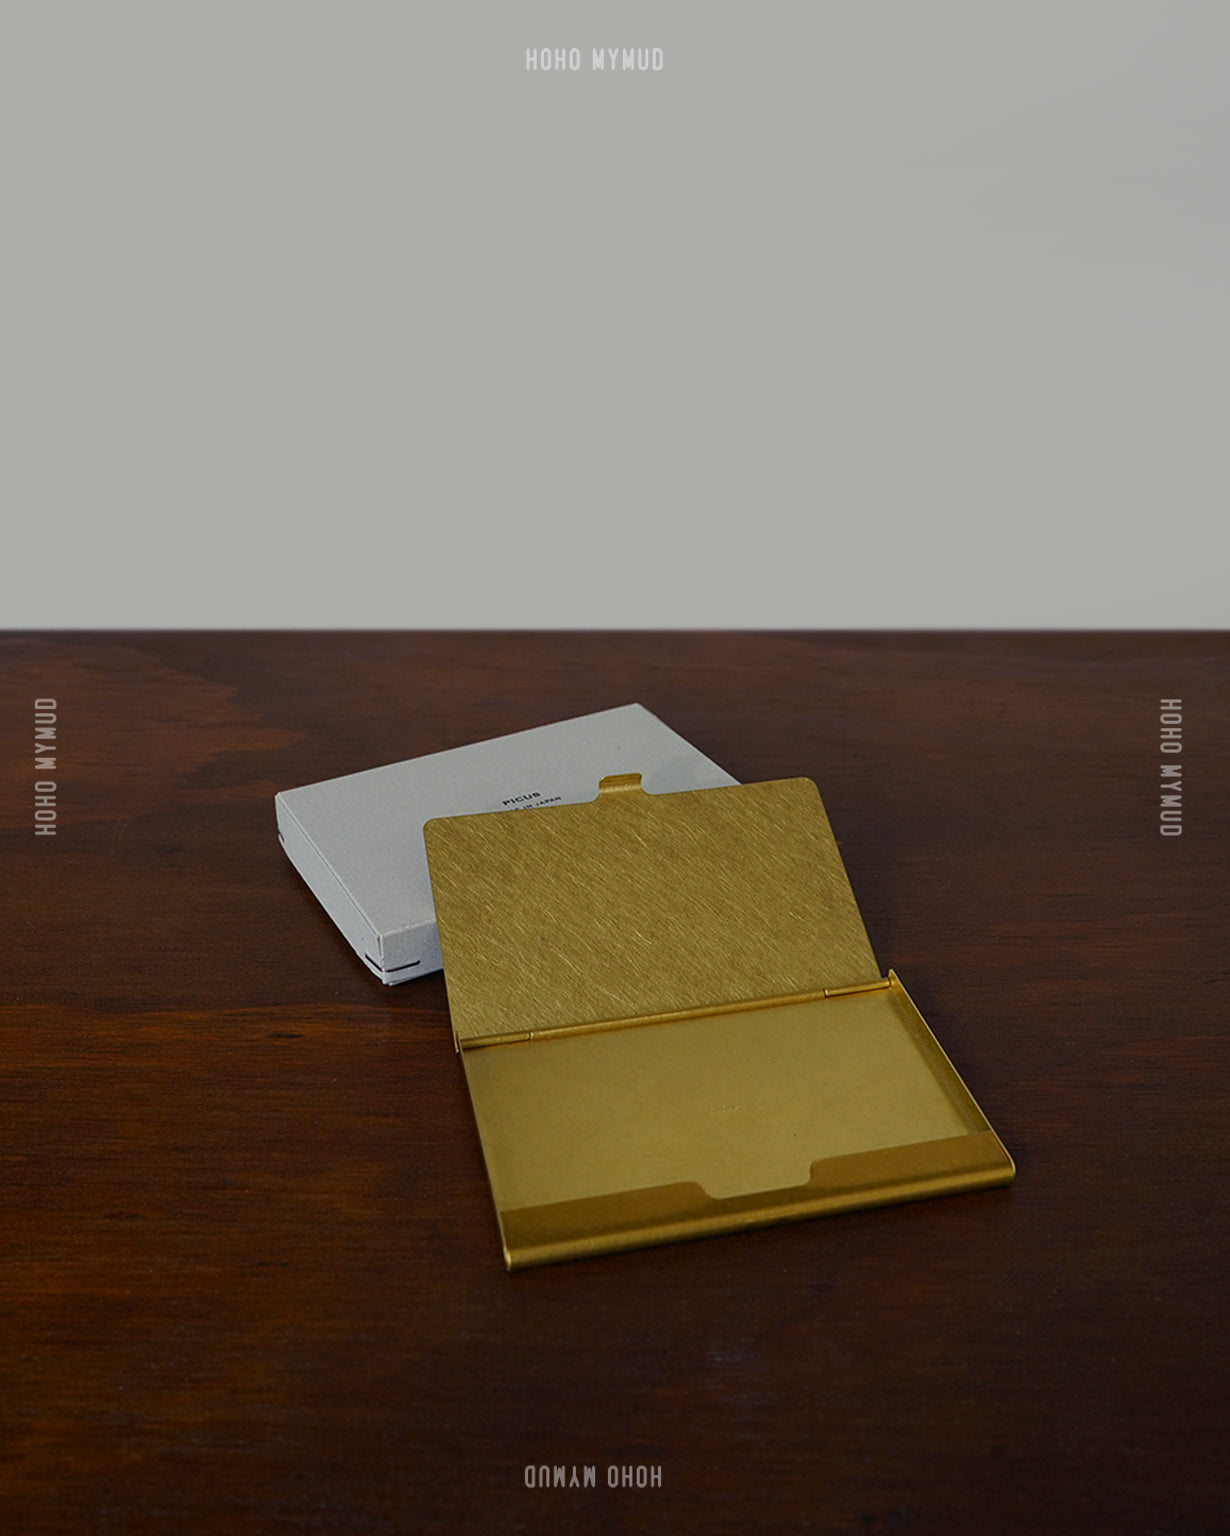 Picus Brass Card Case 日本製黃銅名片 / 卡片夾